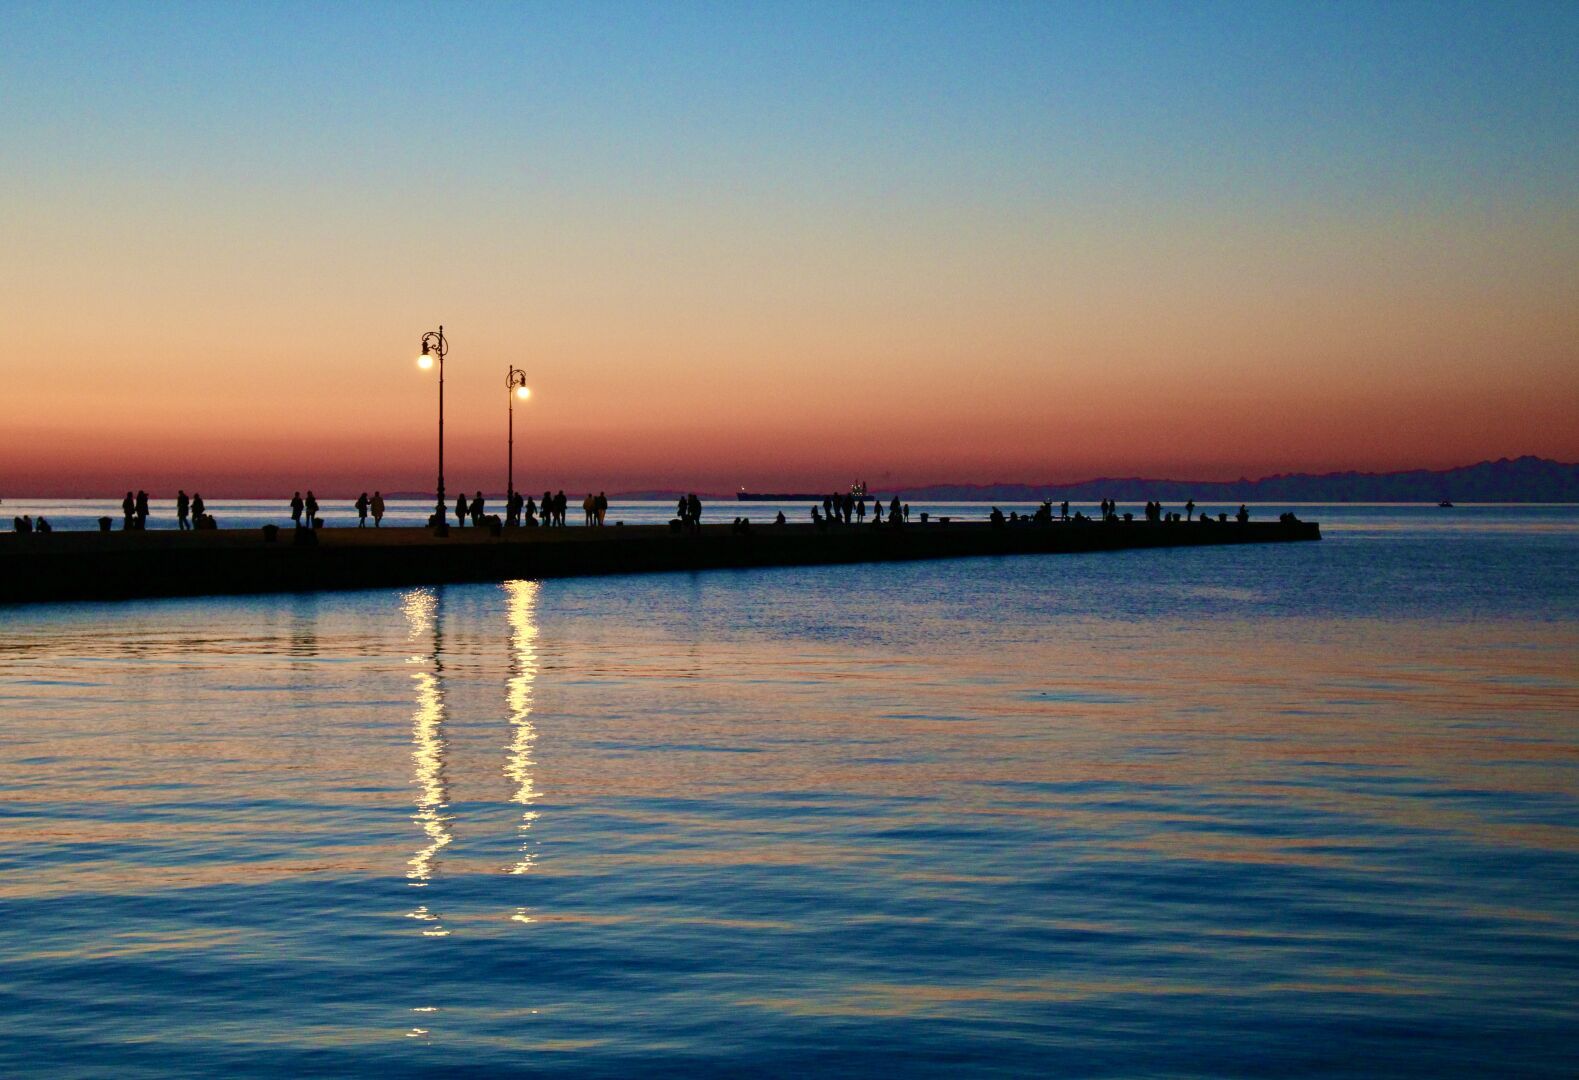 Evening atmosphere in Trieste

#sunset #sundown #photography